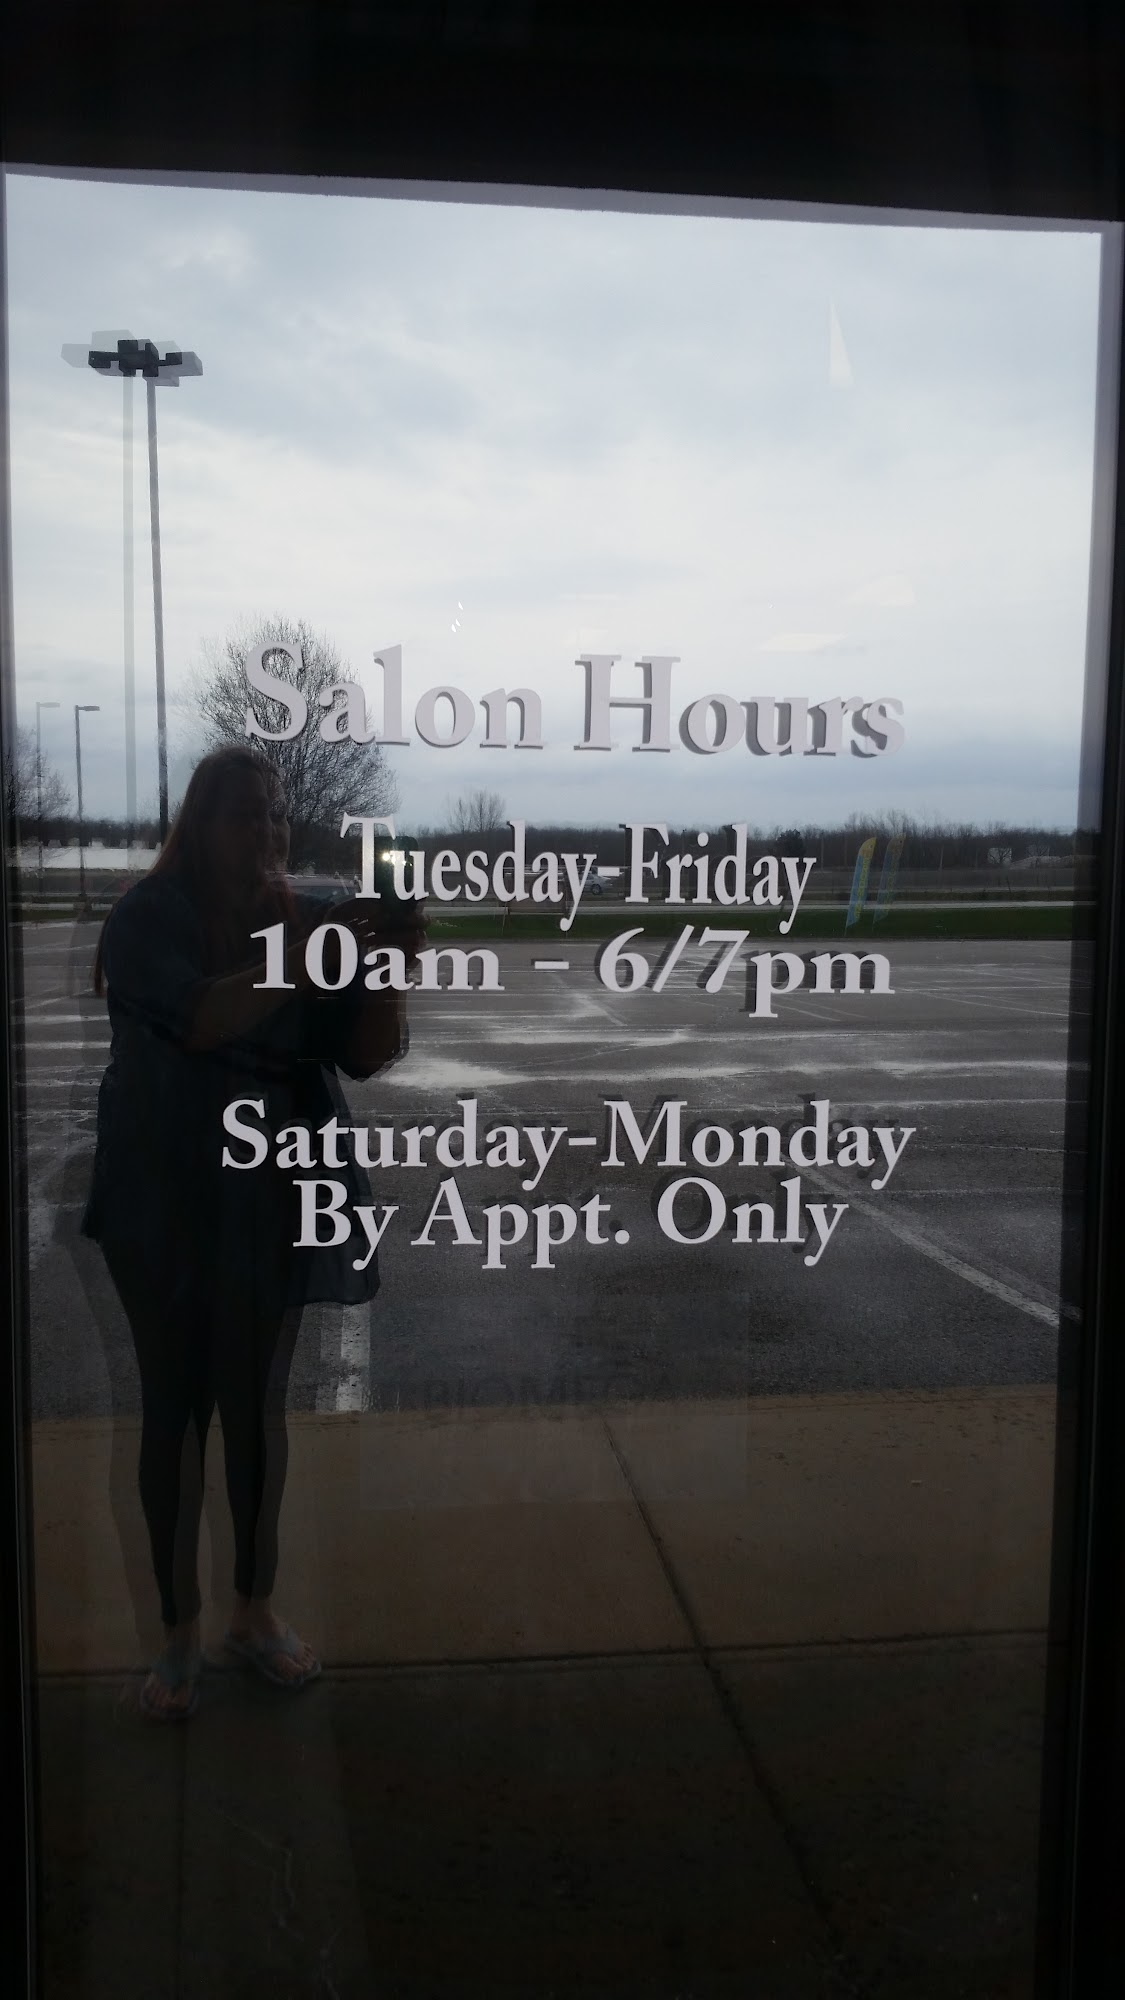 Our Hair Salon 2418, 275 W E Service Rd N suite j, Wright City Missouri 63390